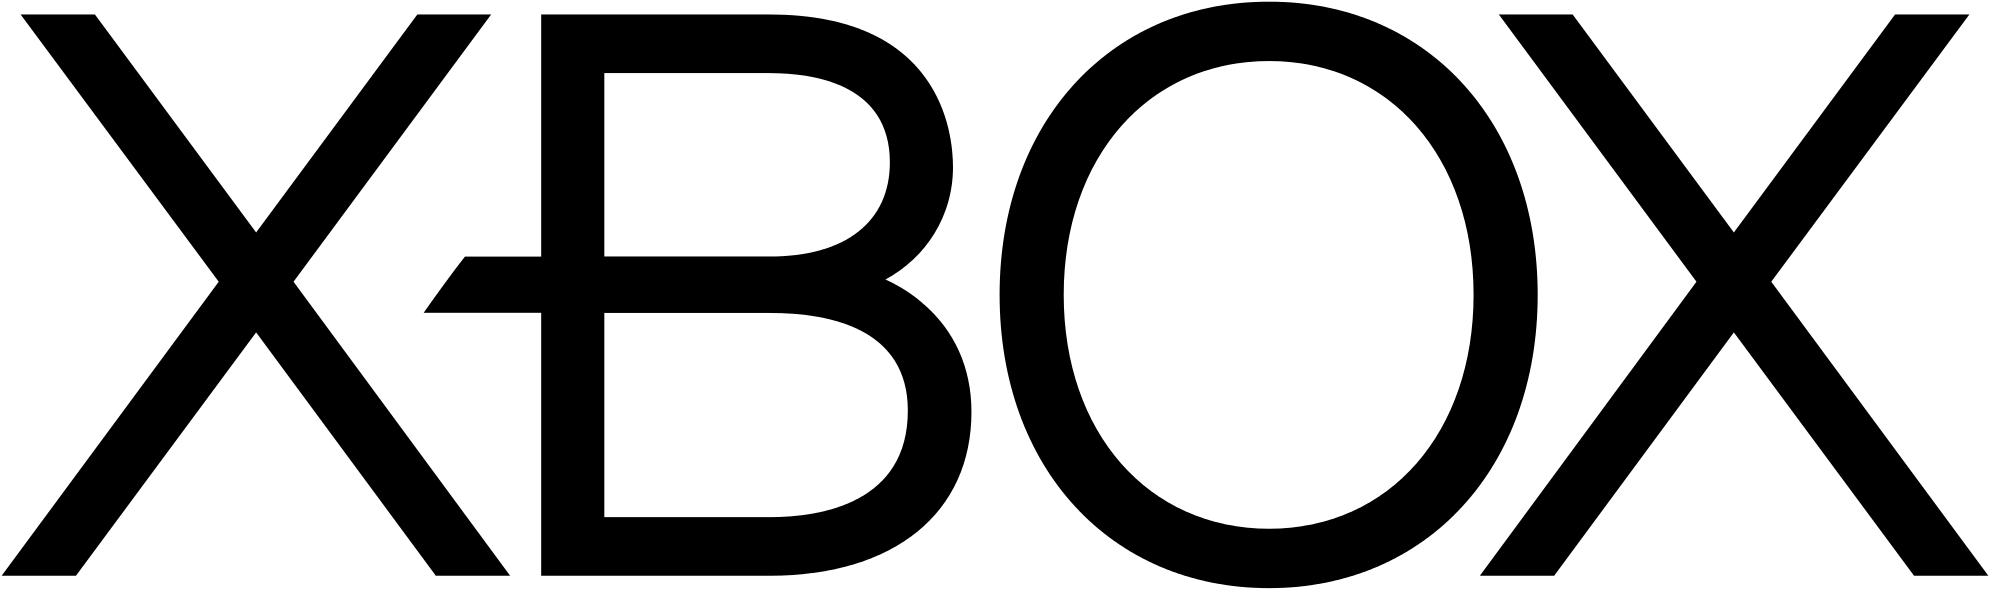 Filexbox - Svg - Xbox One X Logo Png (2000x600)